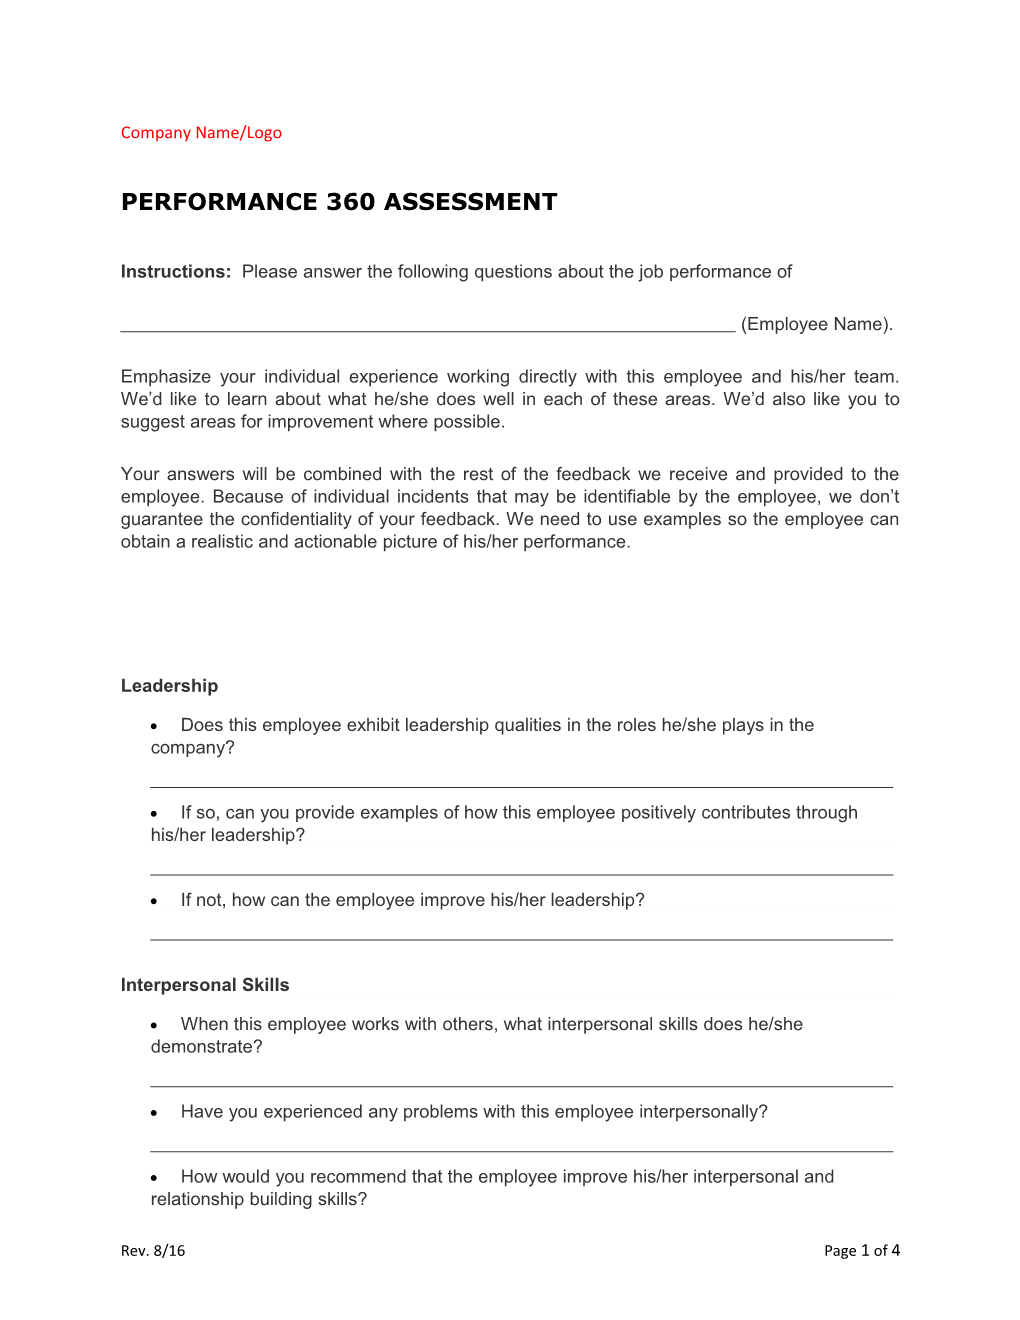 Performance 360 Assessment